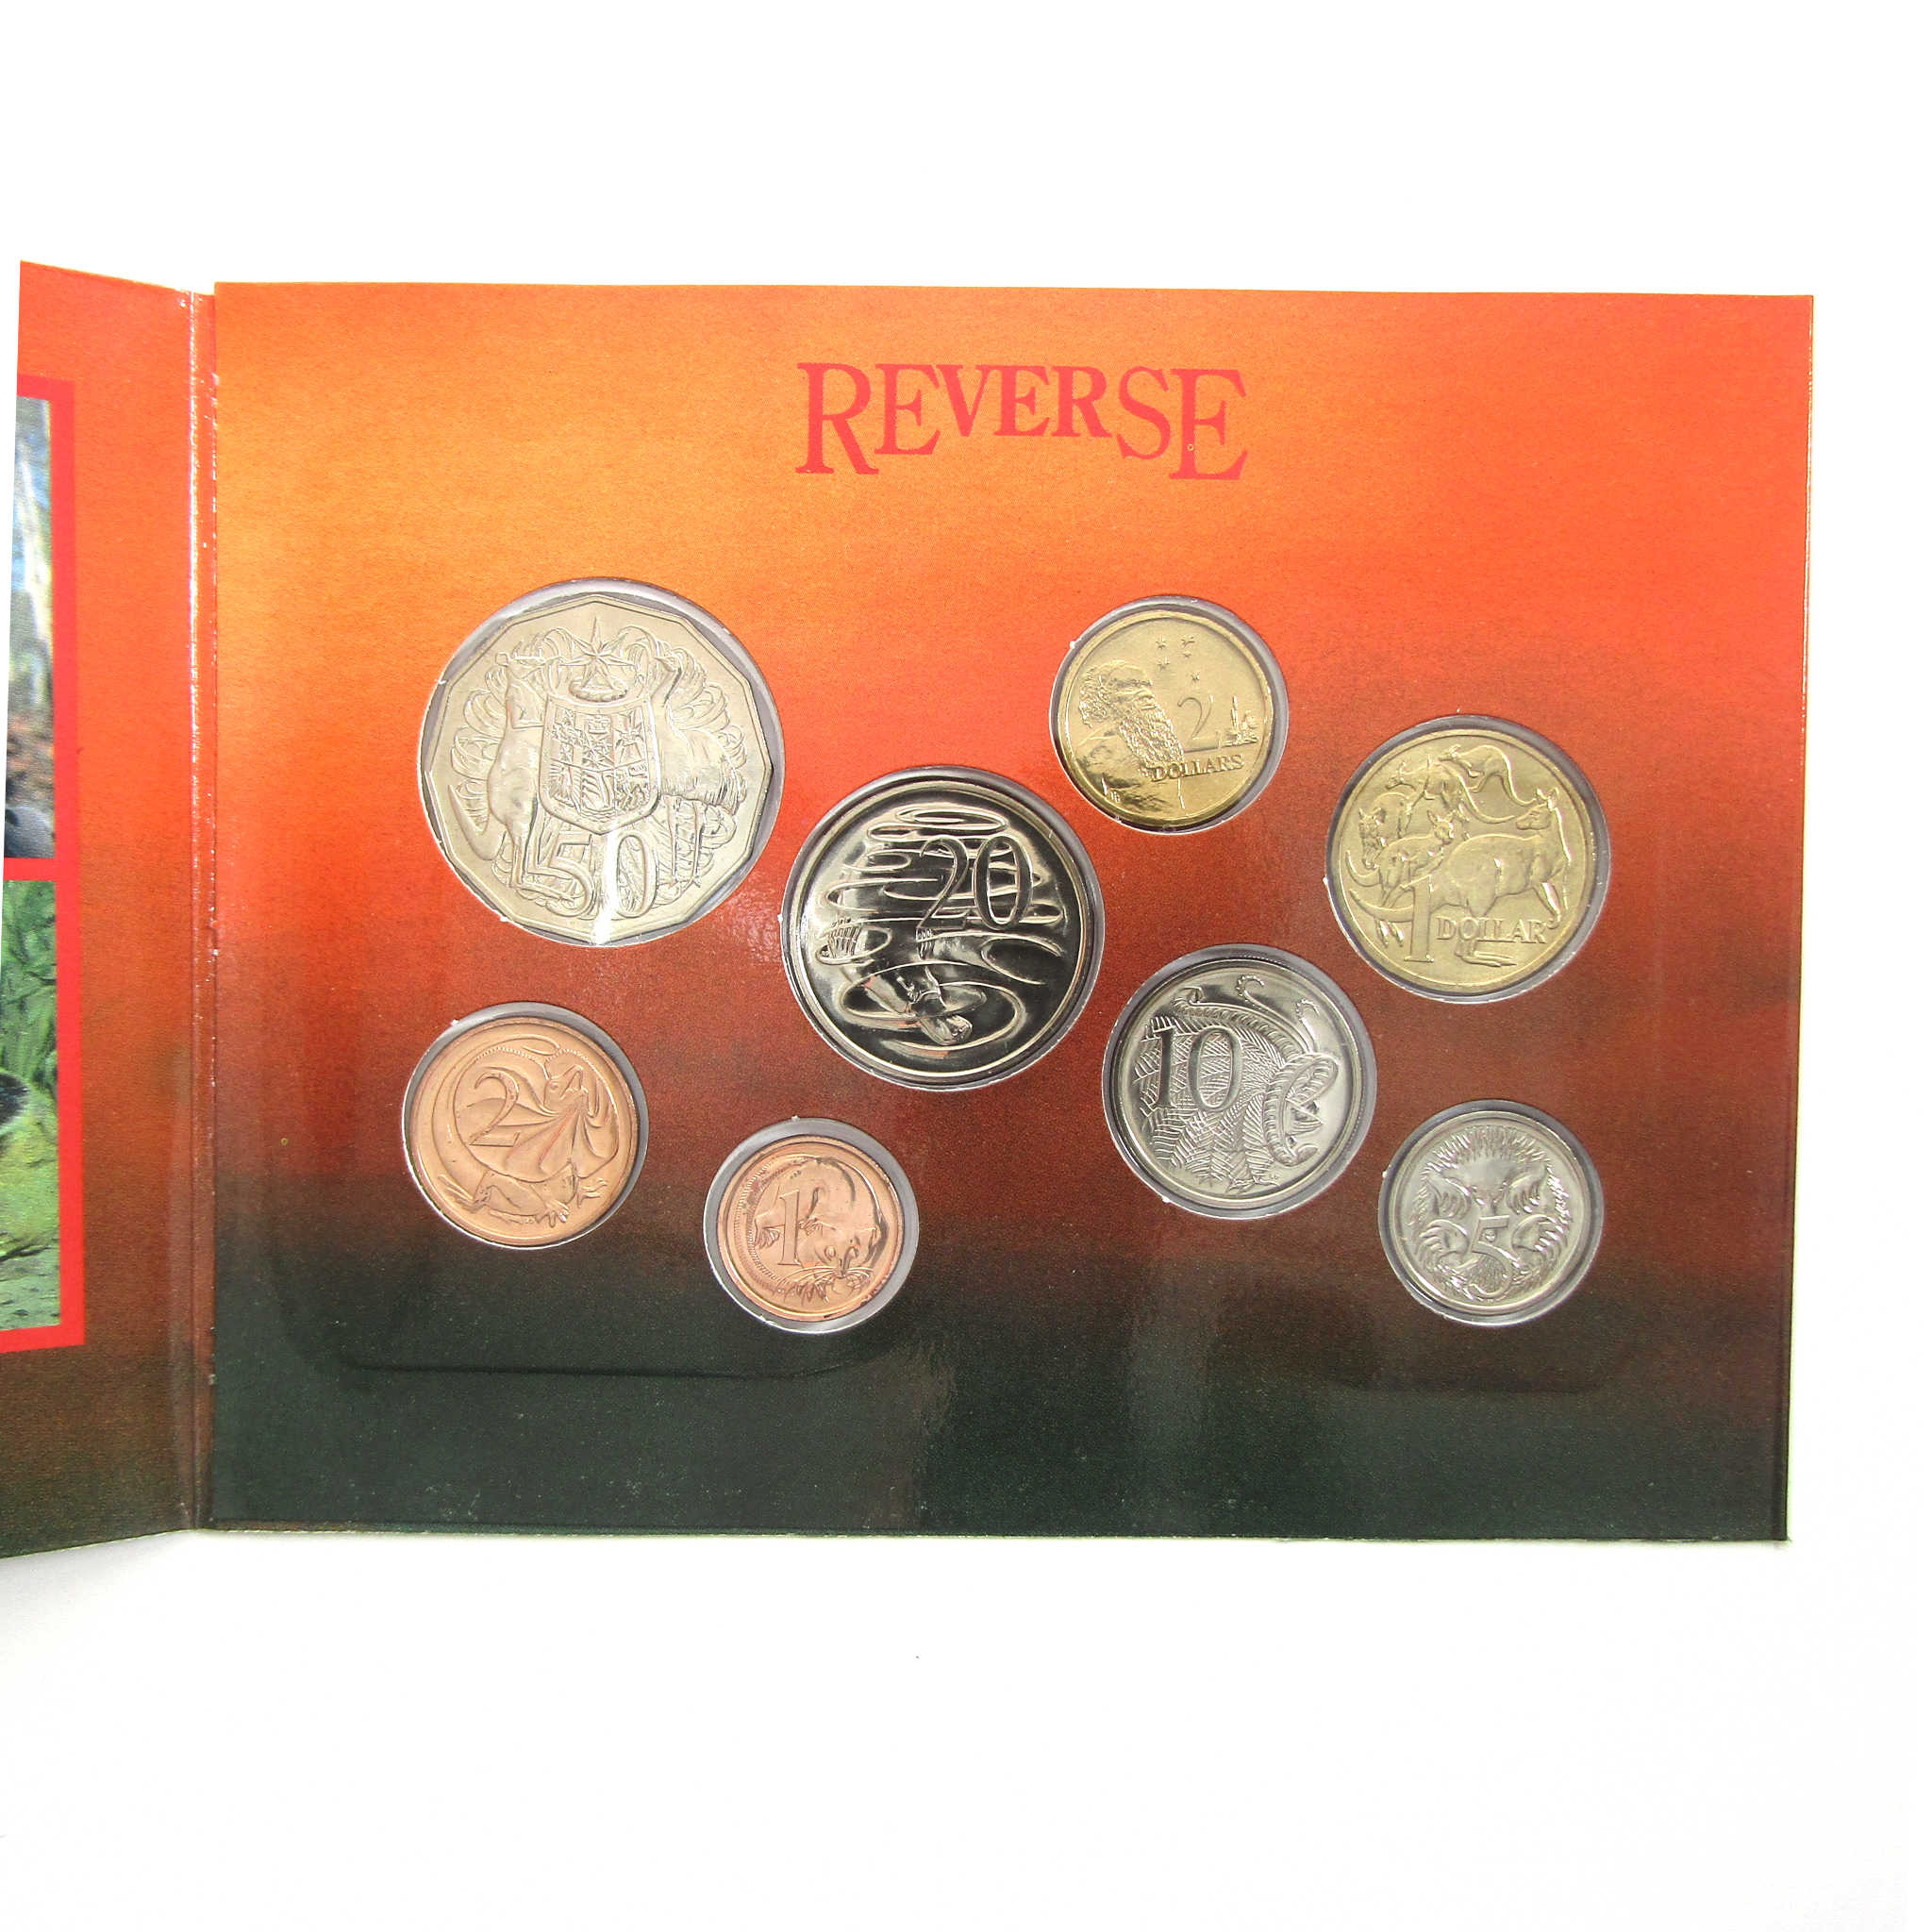 1989 Royal Australian Mint 8 Coin Uncirculated Set SKU:CPC6218